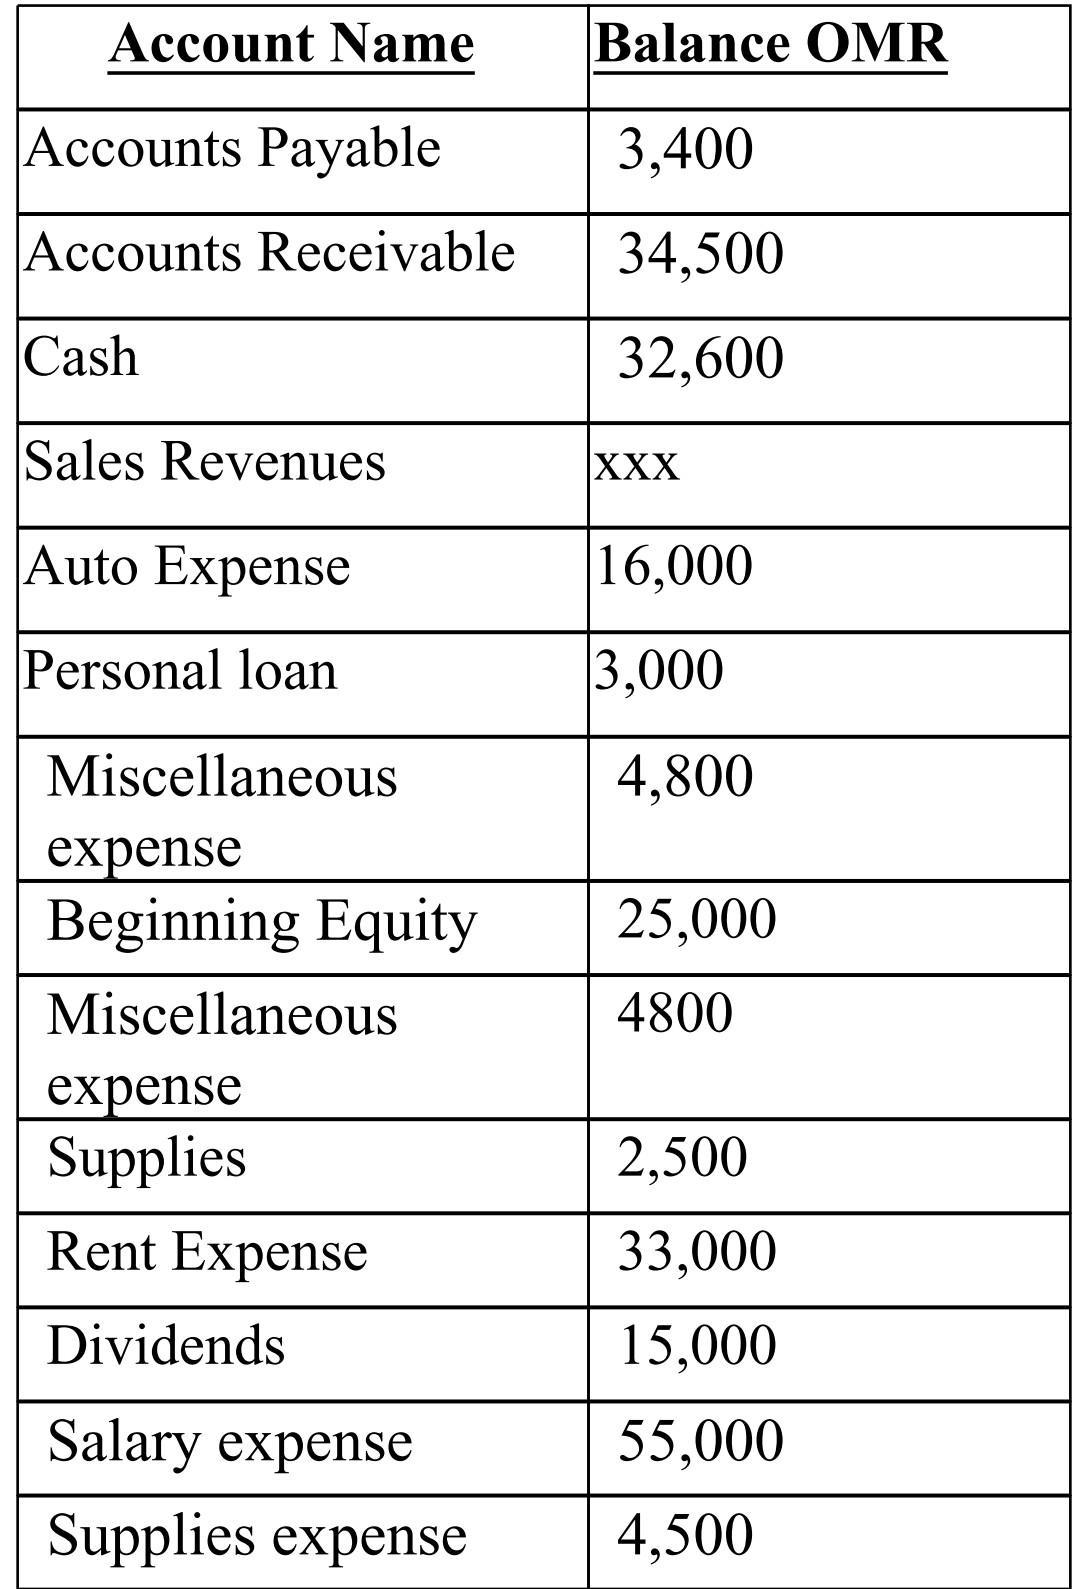 Account Name Balance OMR Accounts Payable 3,400 Accounts Receivable 34,500 Cash 32,600 Sales Revenues XXX Auto Expense 16,000